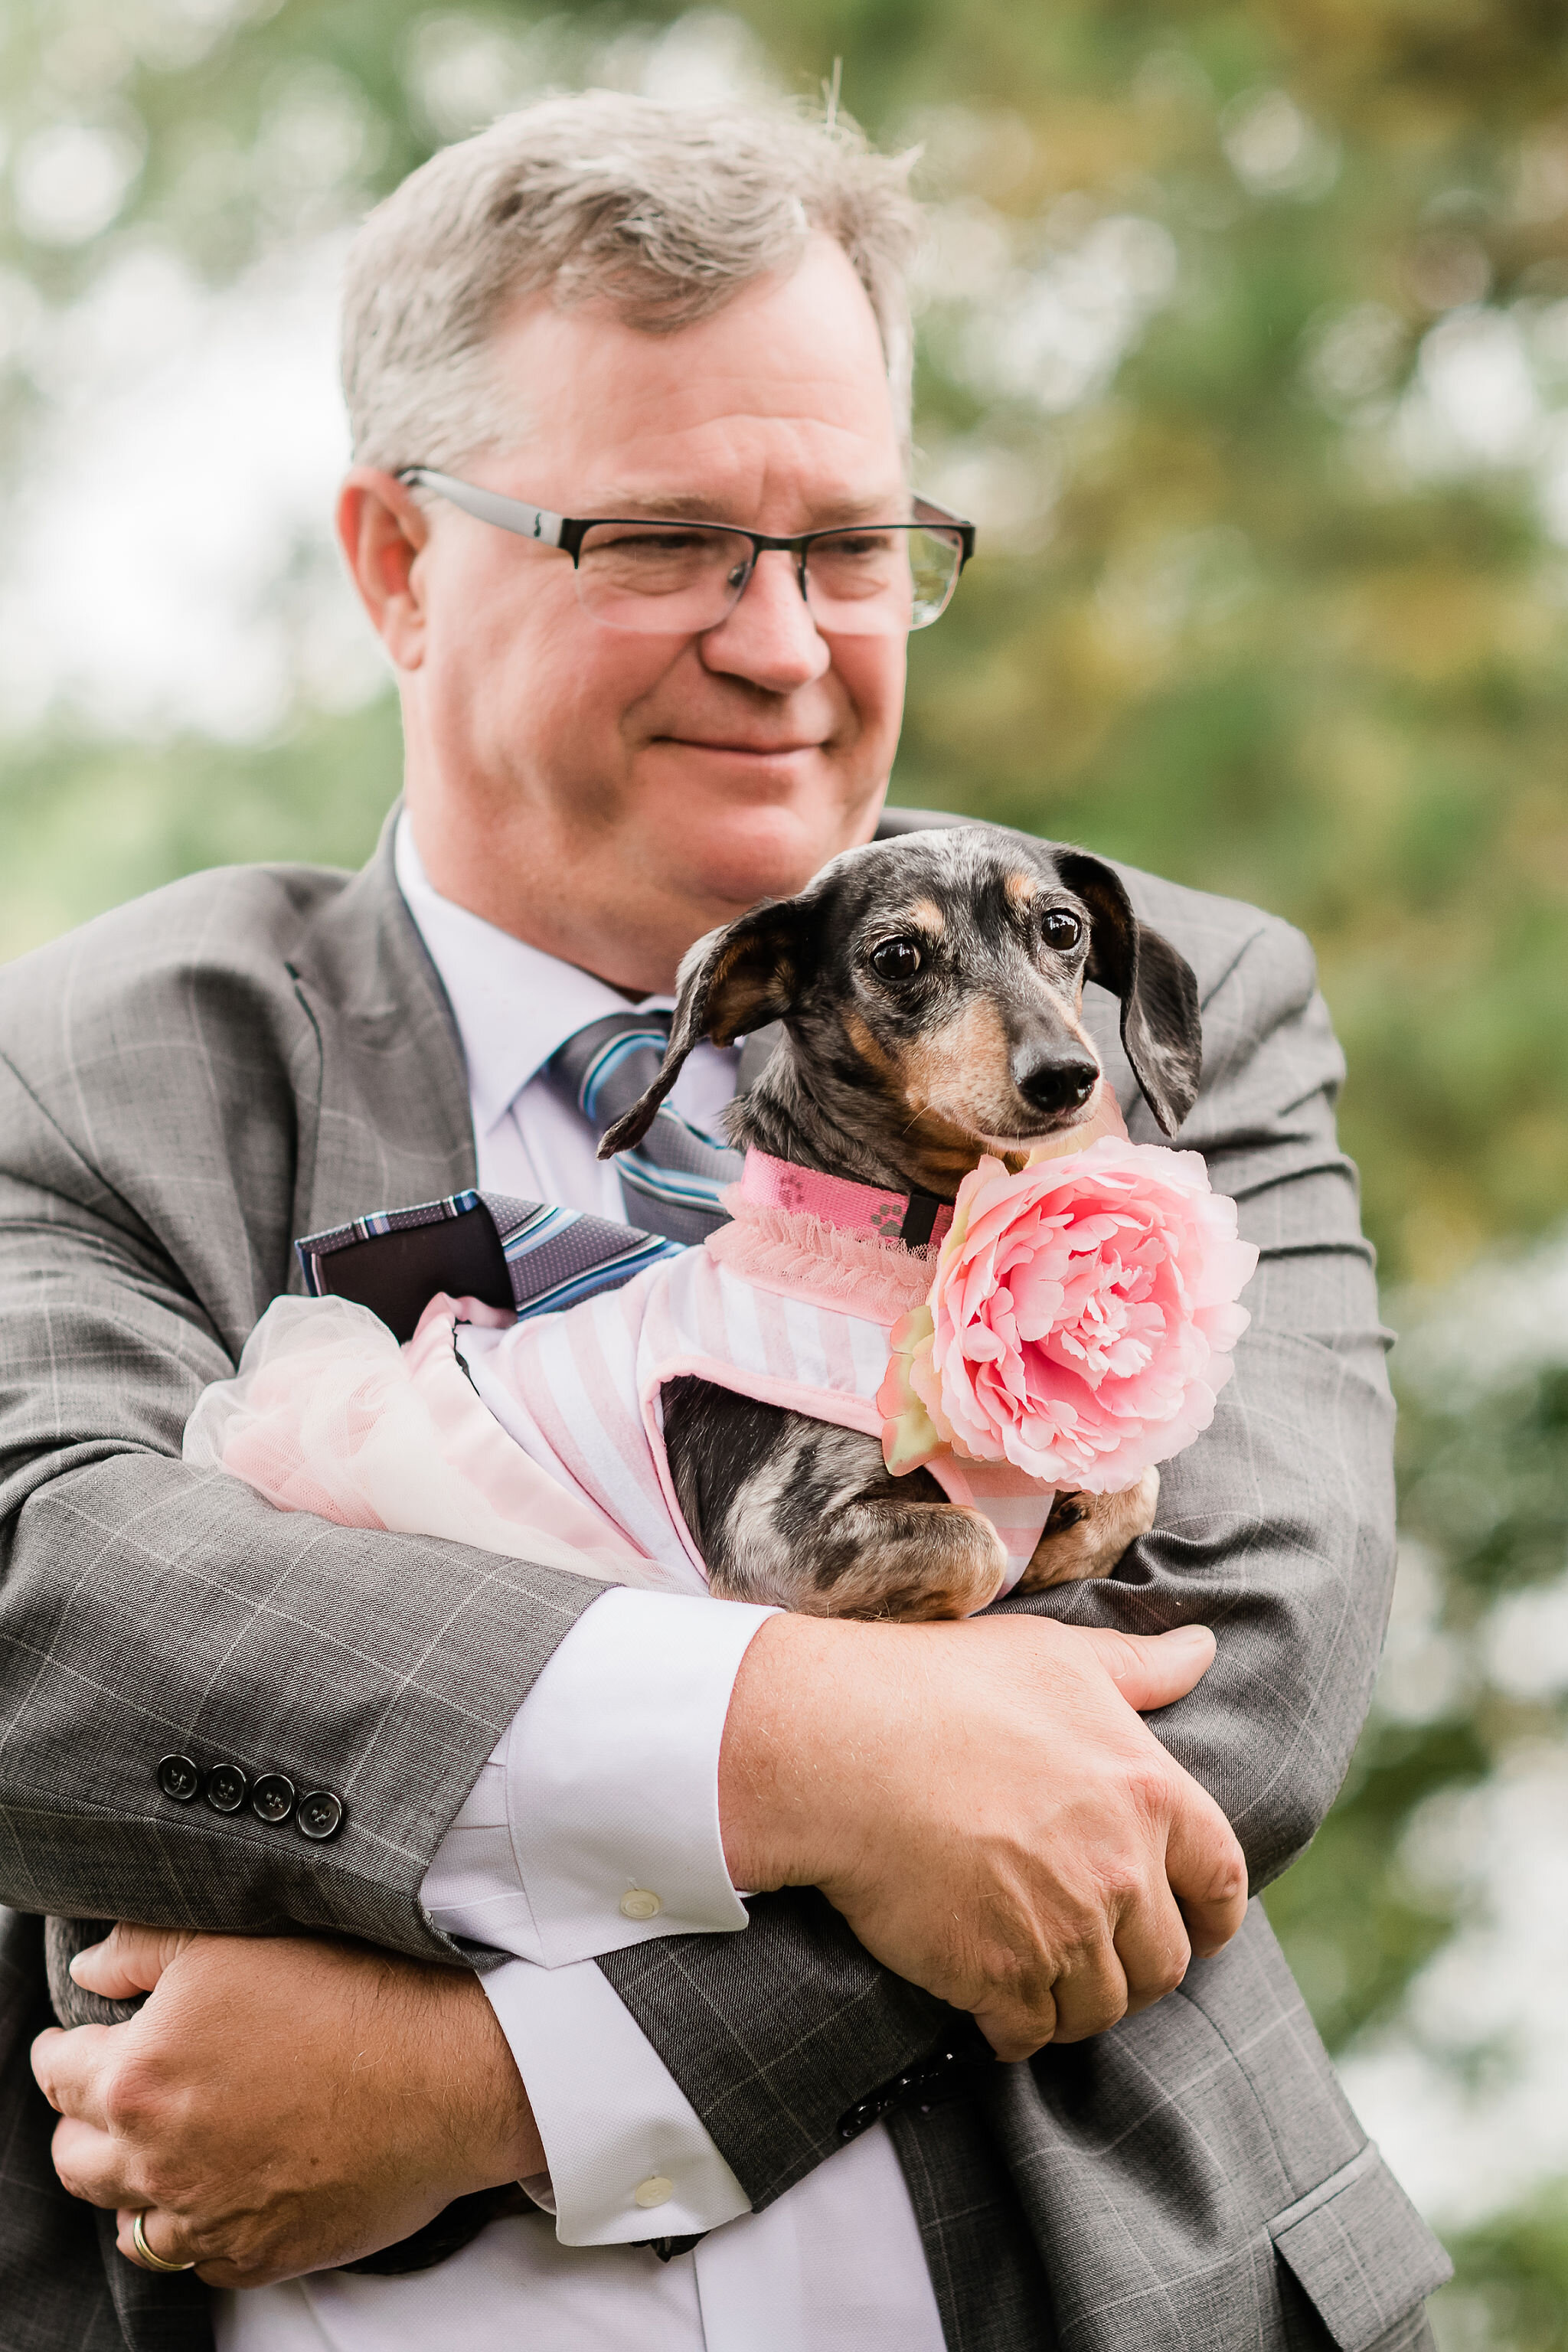 Wedding guest holding dog